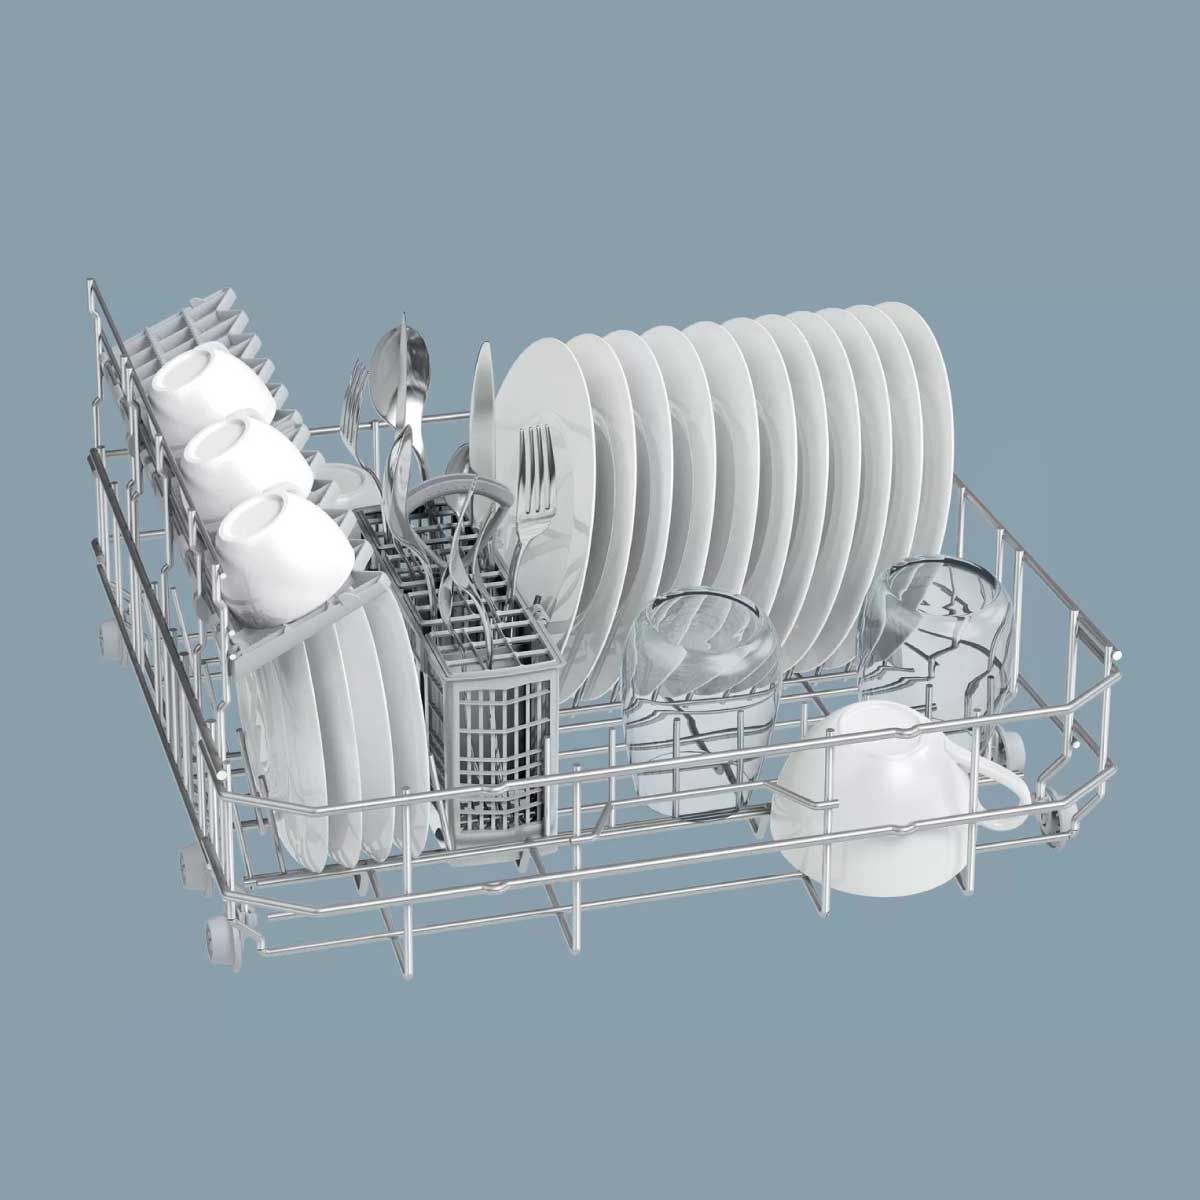 BOSCH เครื่องล้างจานแบบตั้งโต๊ะ 55 cm White ดิจิตอล ซีรี่ 4 รุ่น SKS62E32EU